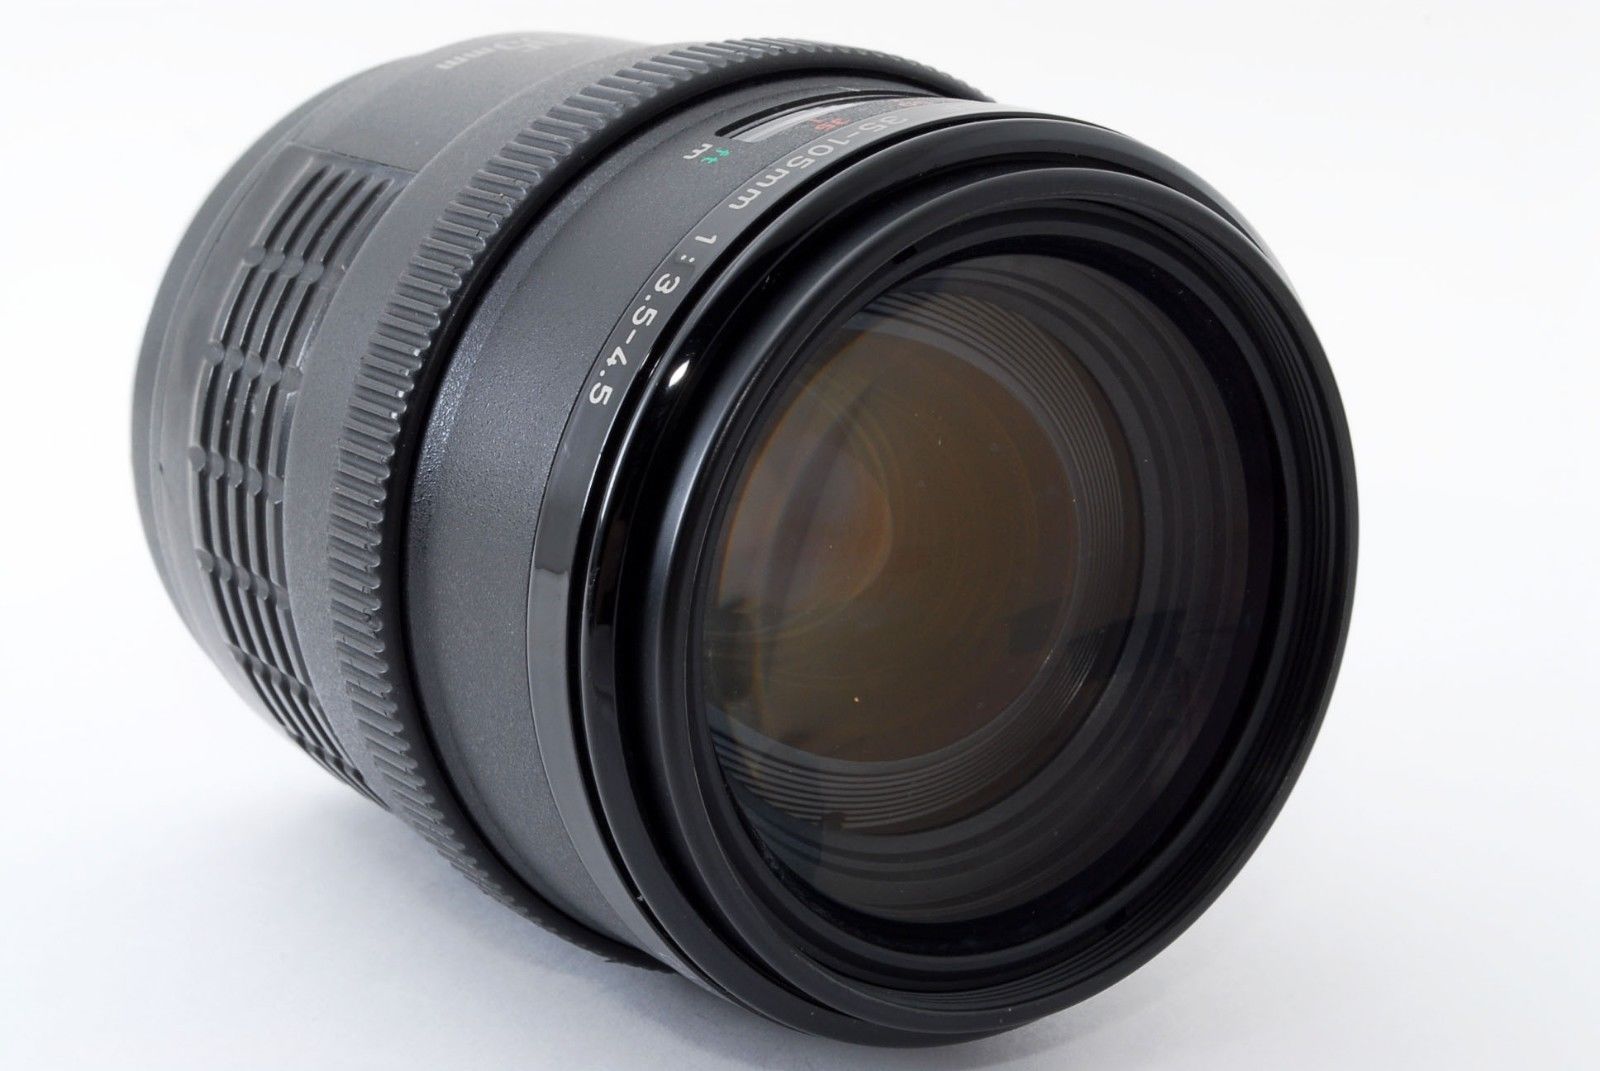 Canon EF 35-105mm f/3.5-4.5 Lens